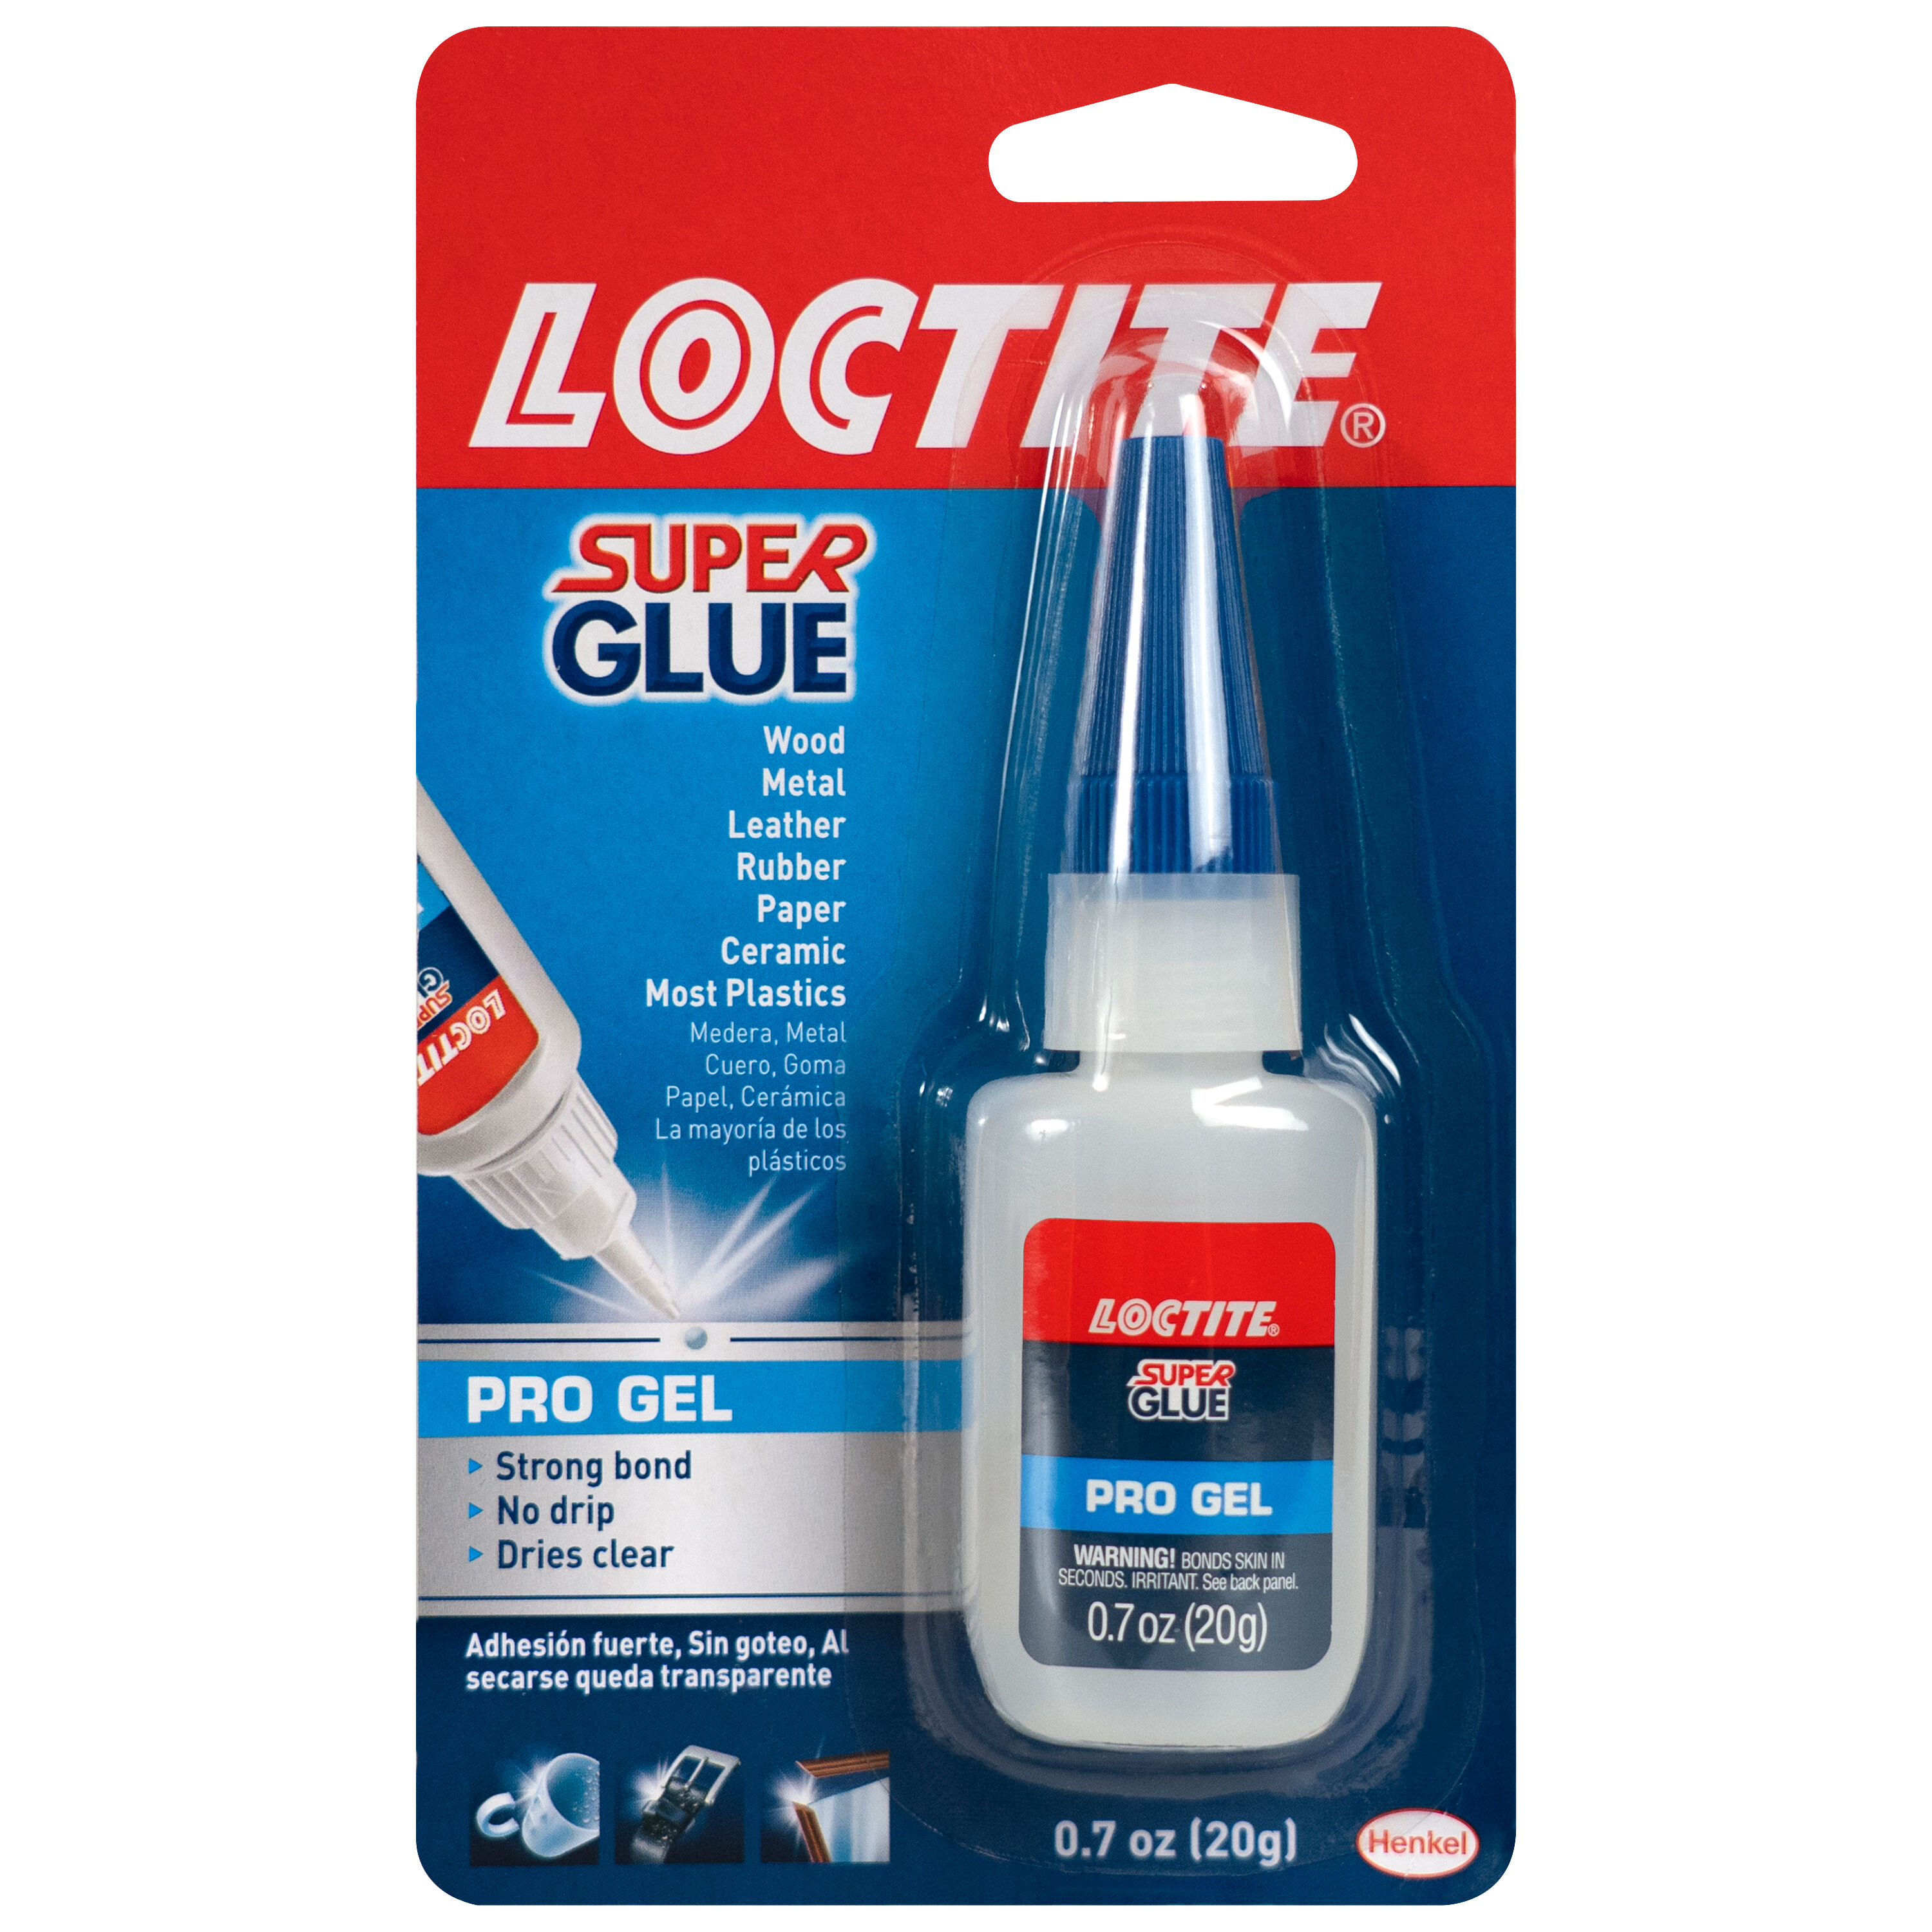 Krazy Glue Maximum Bond Ultra-Thick No-Run Gel Super Glue, 0.7 oz